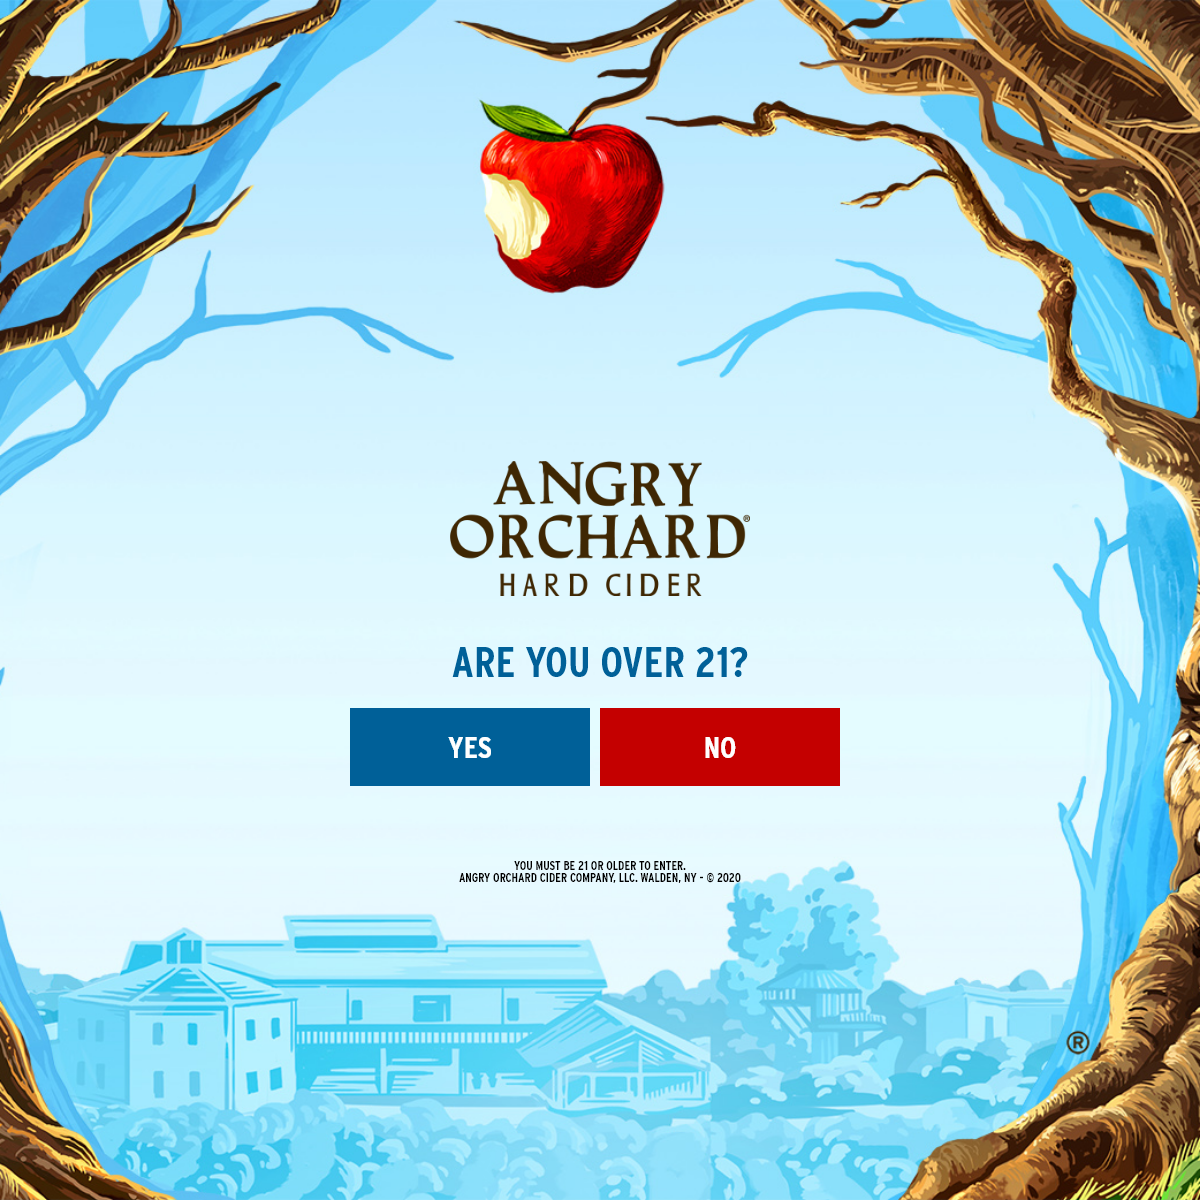 A complete backup of angryorchard.com